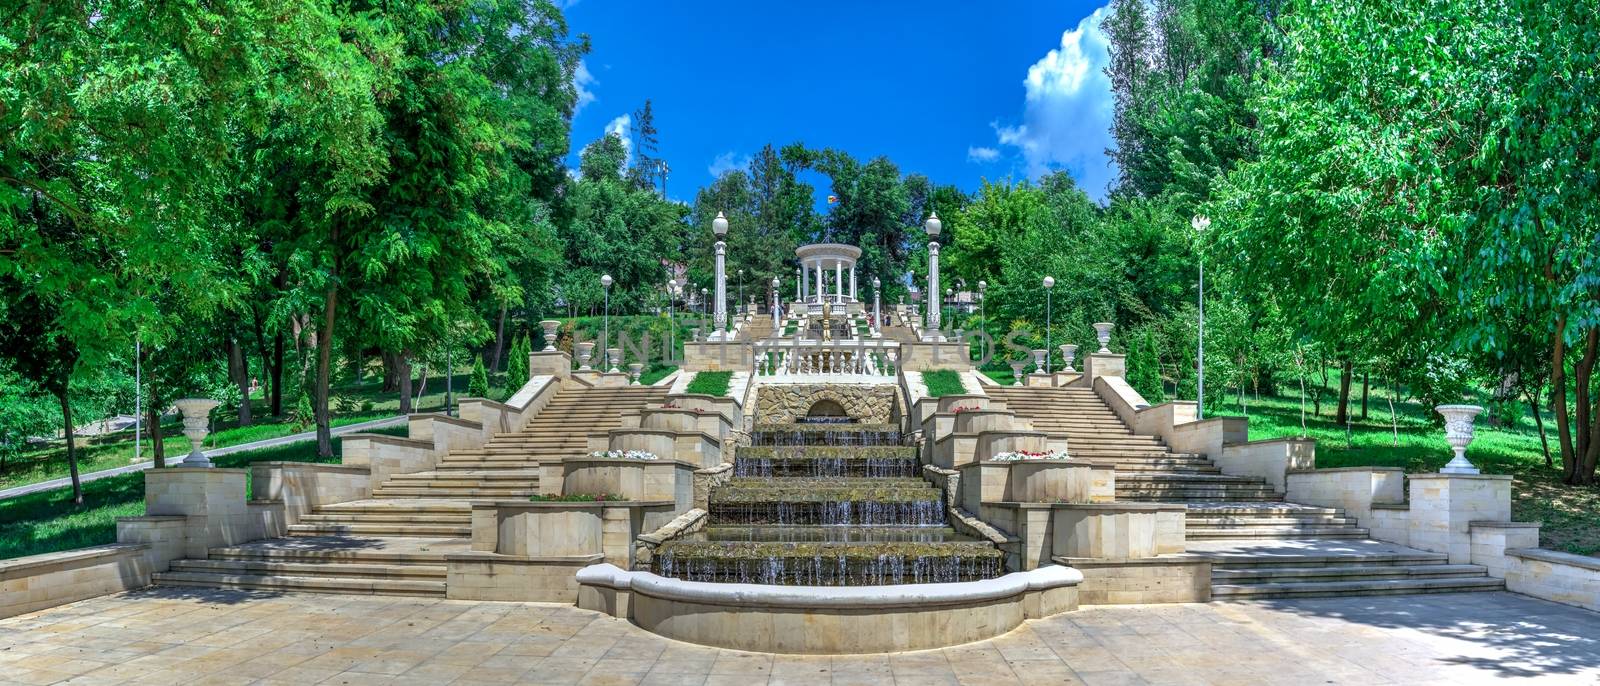 Cascading fountains in Chisinau, Moldova by Multipedia